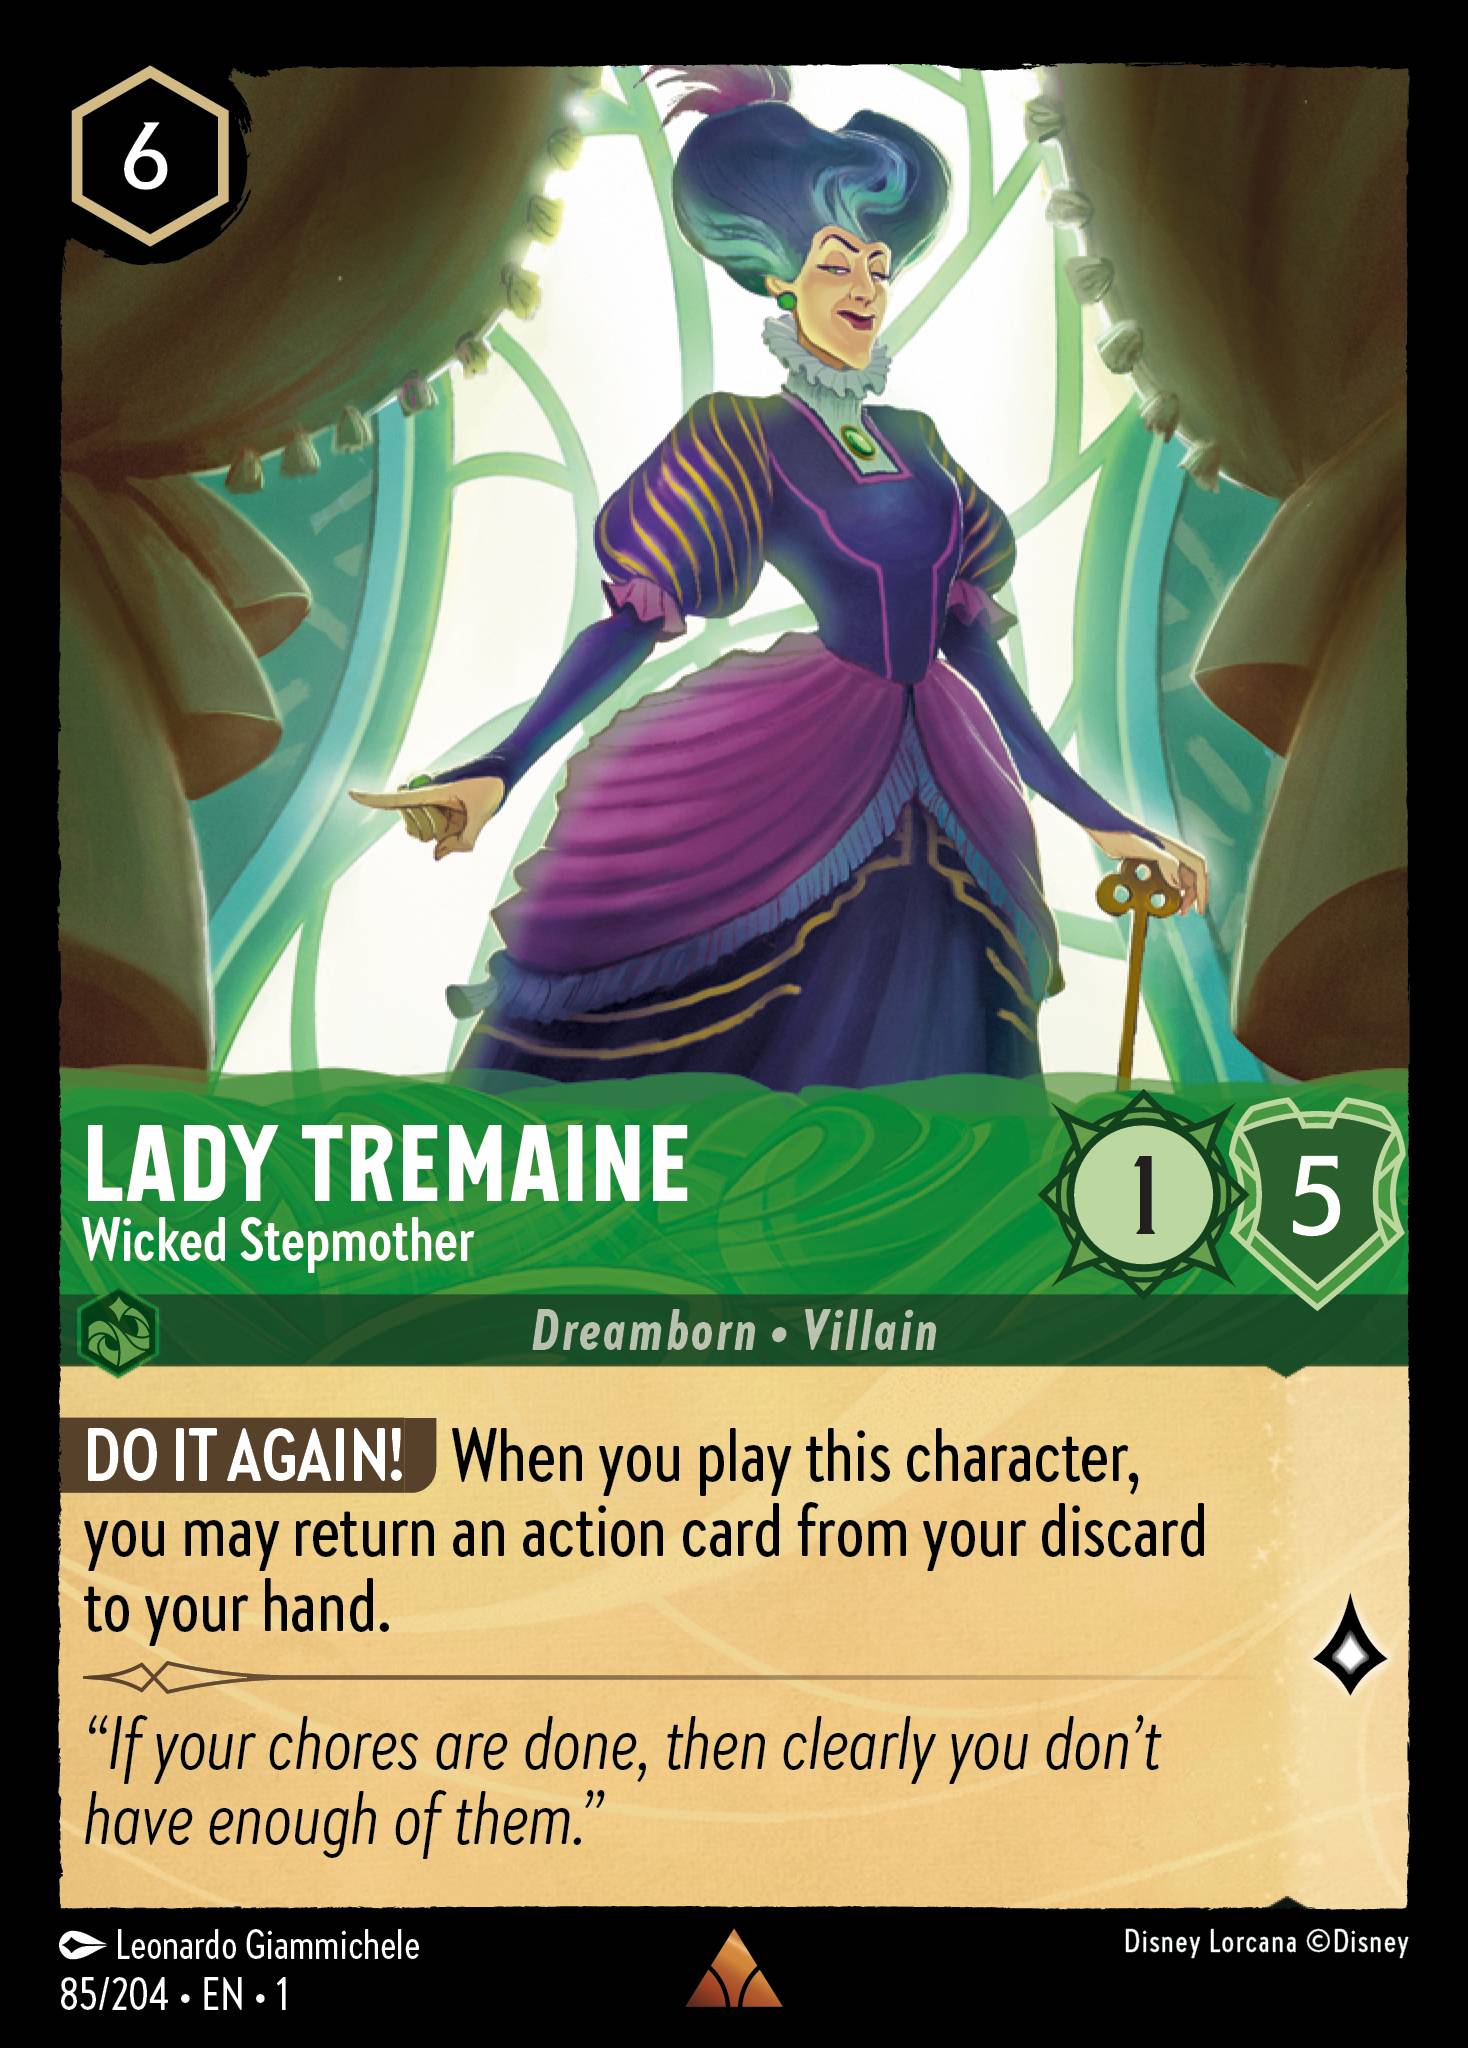 Lady Tremaine